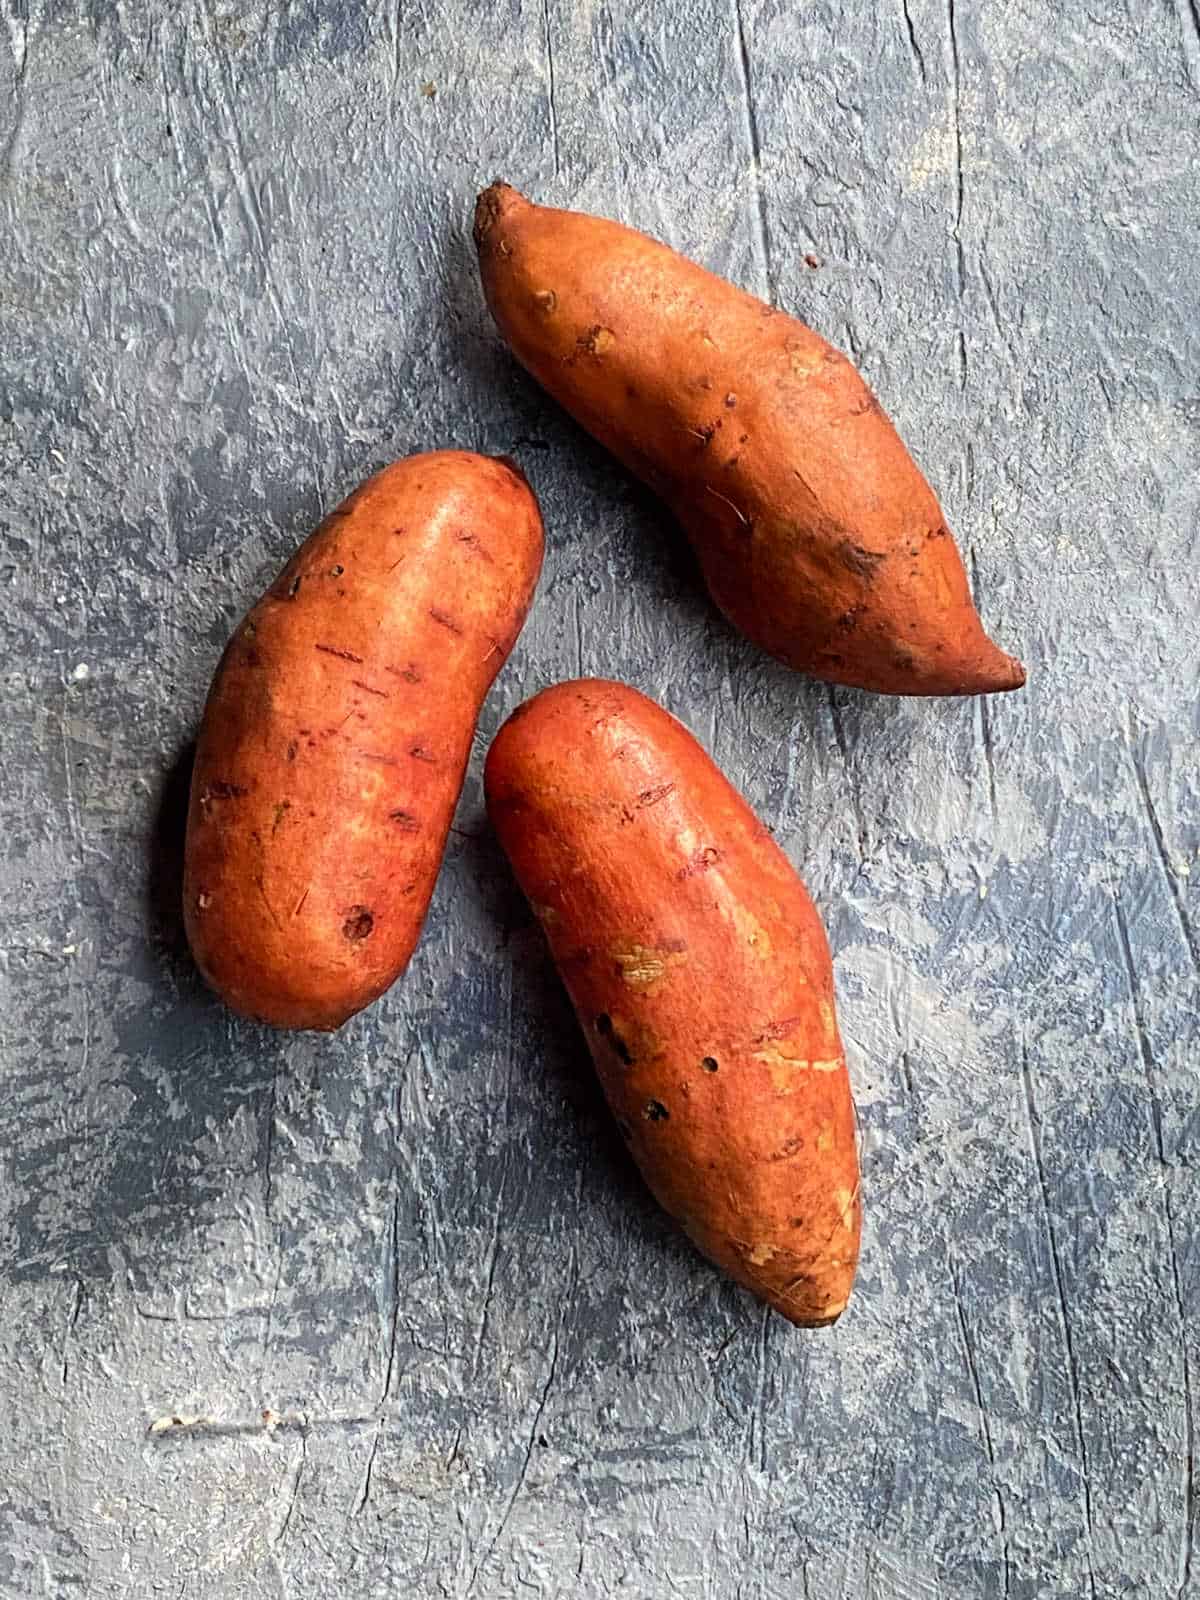 three sweet potatoes